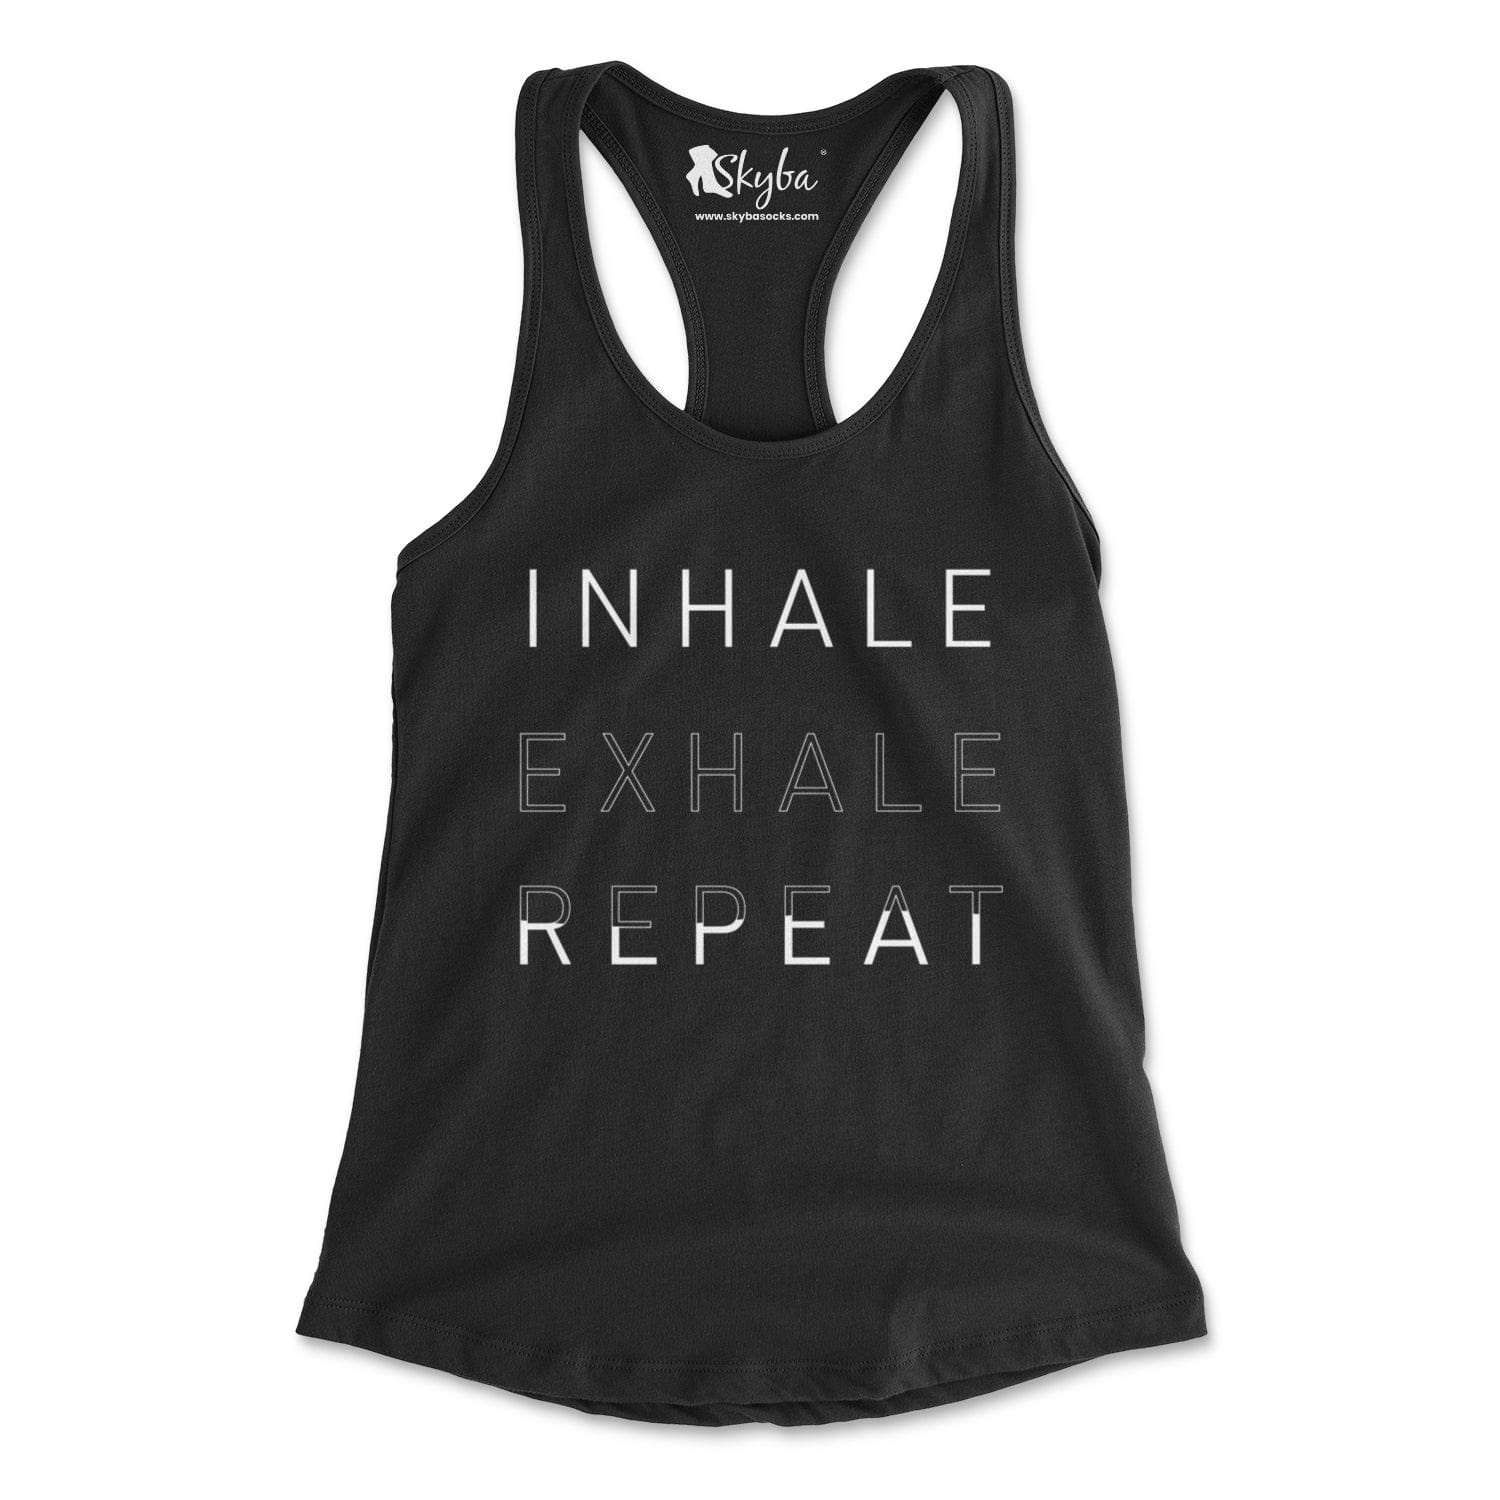 "Inhale Exhale Repeat" Pilates Principles - Slim Fit Tank Skyba Tank Top